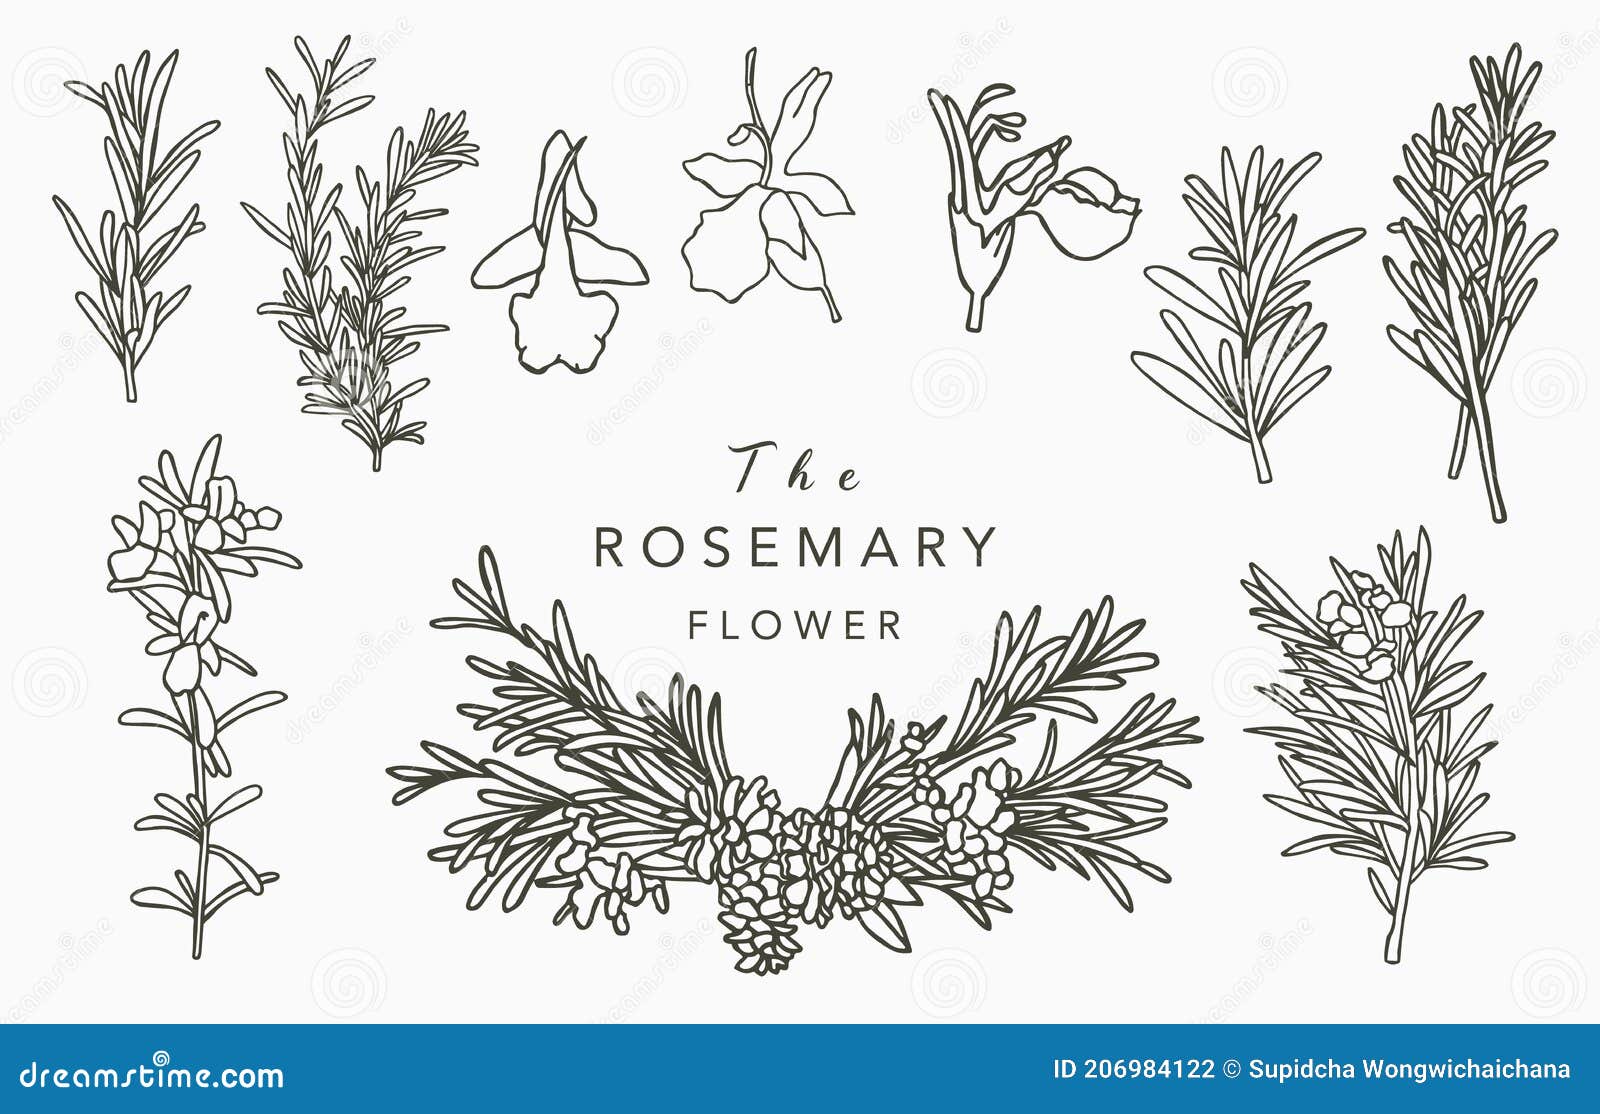 Rosemary Tattoo Name | TikTok